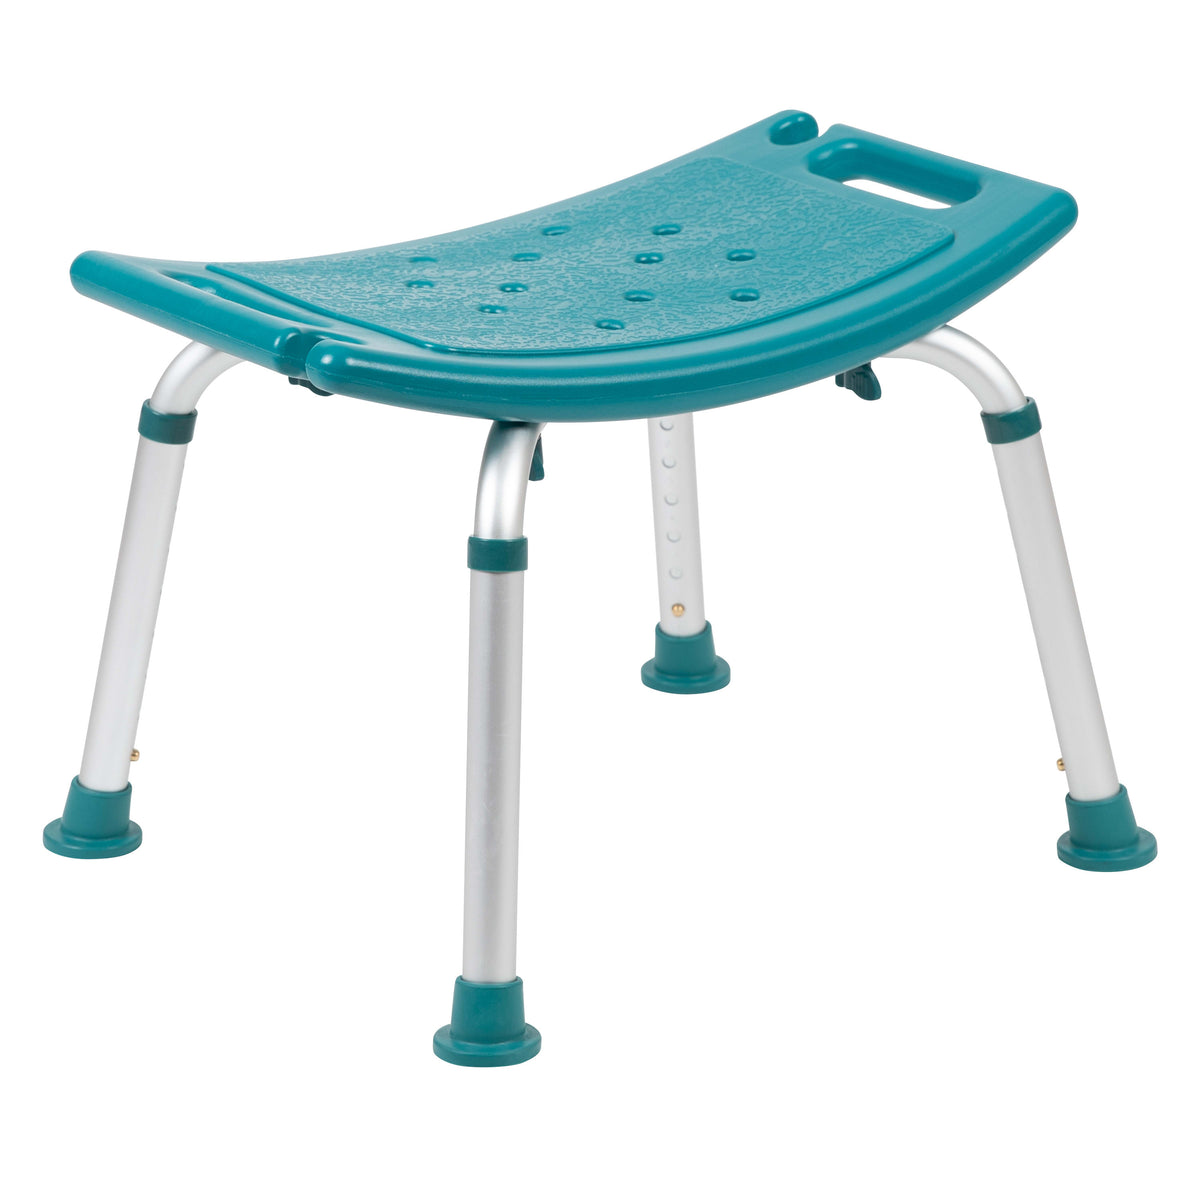 Teal |#| Tool-Free 300 Lb. Capacity, Adjustable Teal Bath & Shower Chair w/ Non-slip Feet